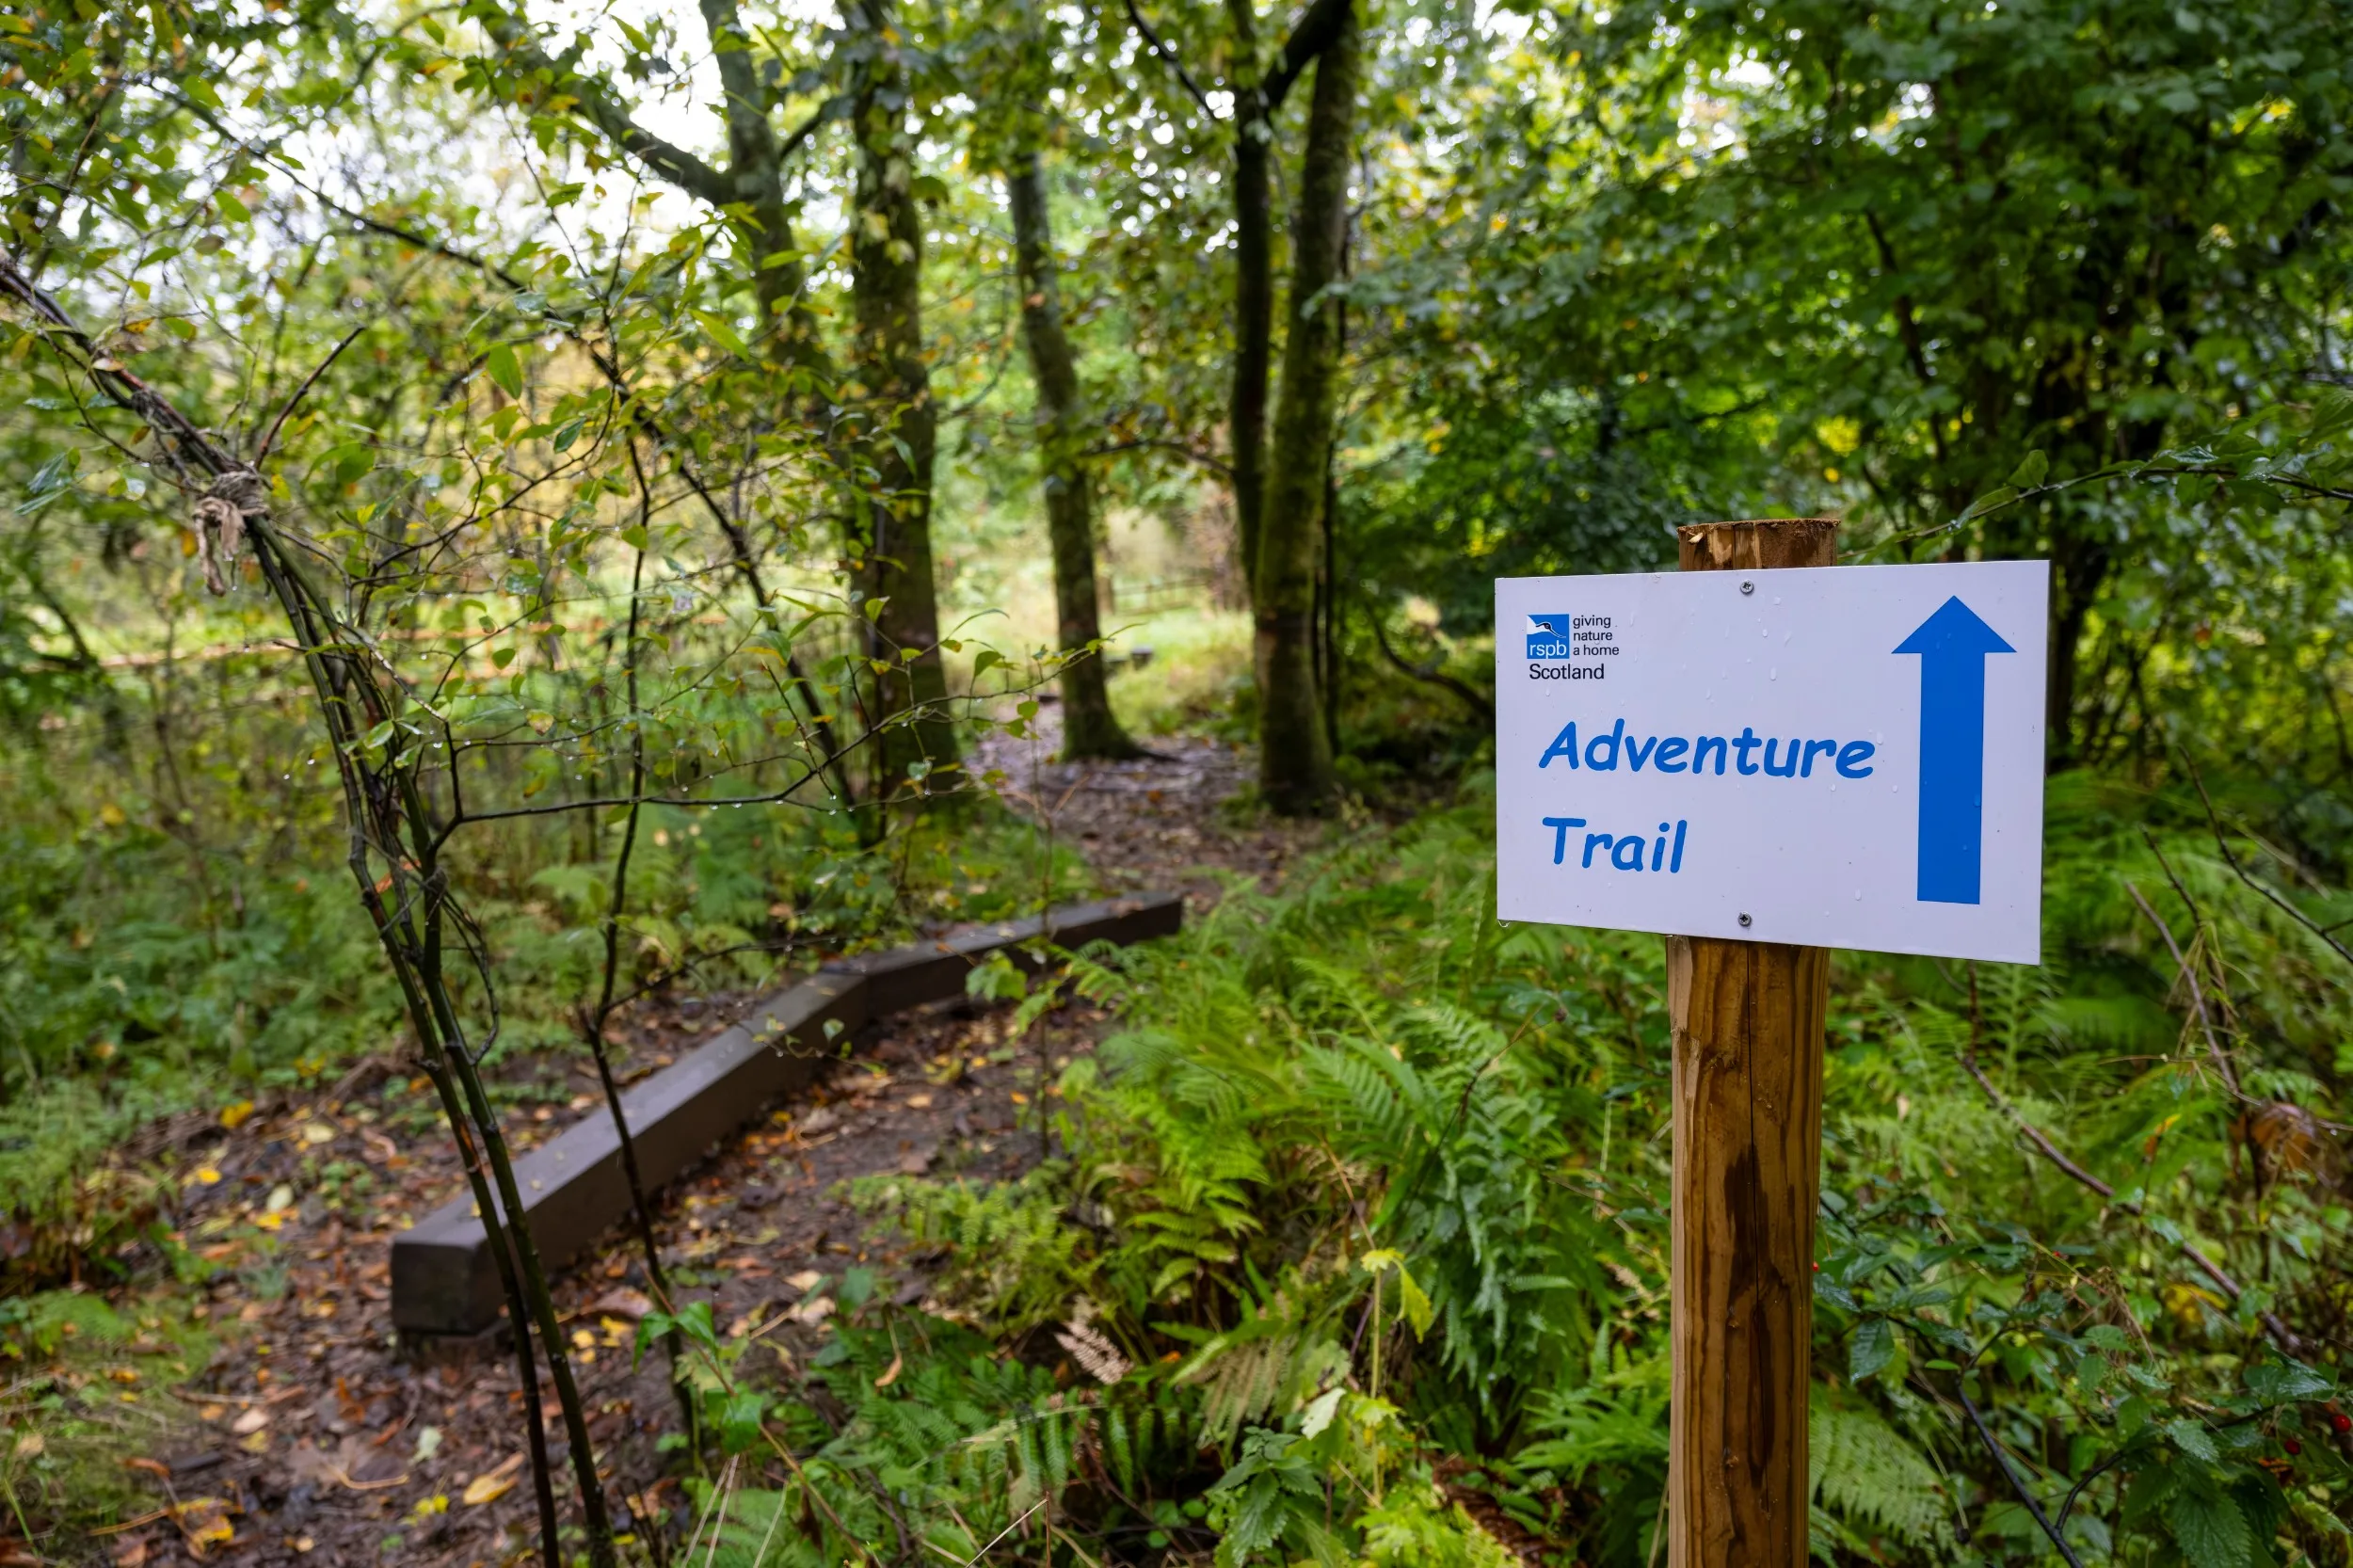 Adventure trail signage at RSPB Lochwinnoch nature reserve. 